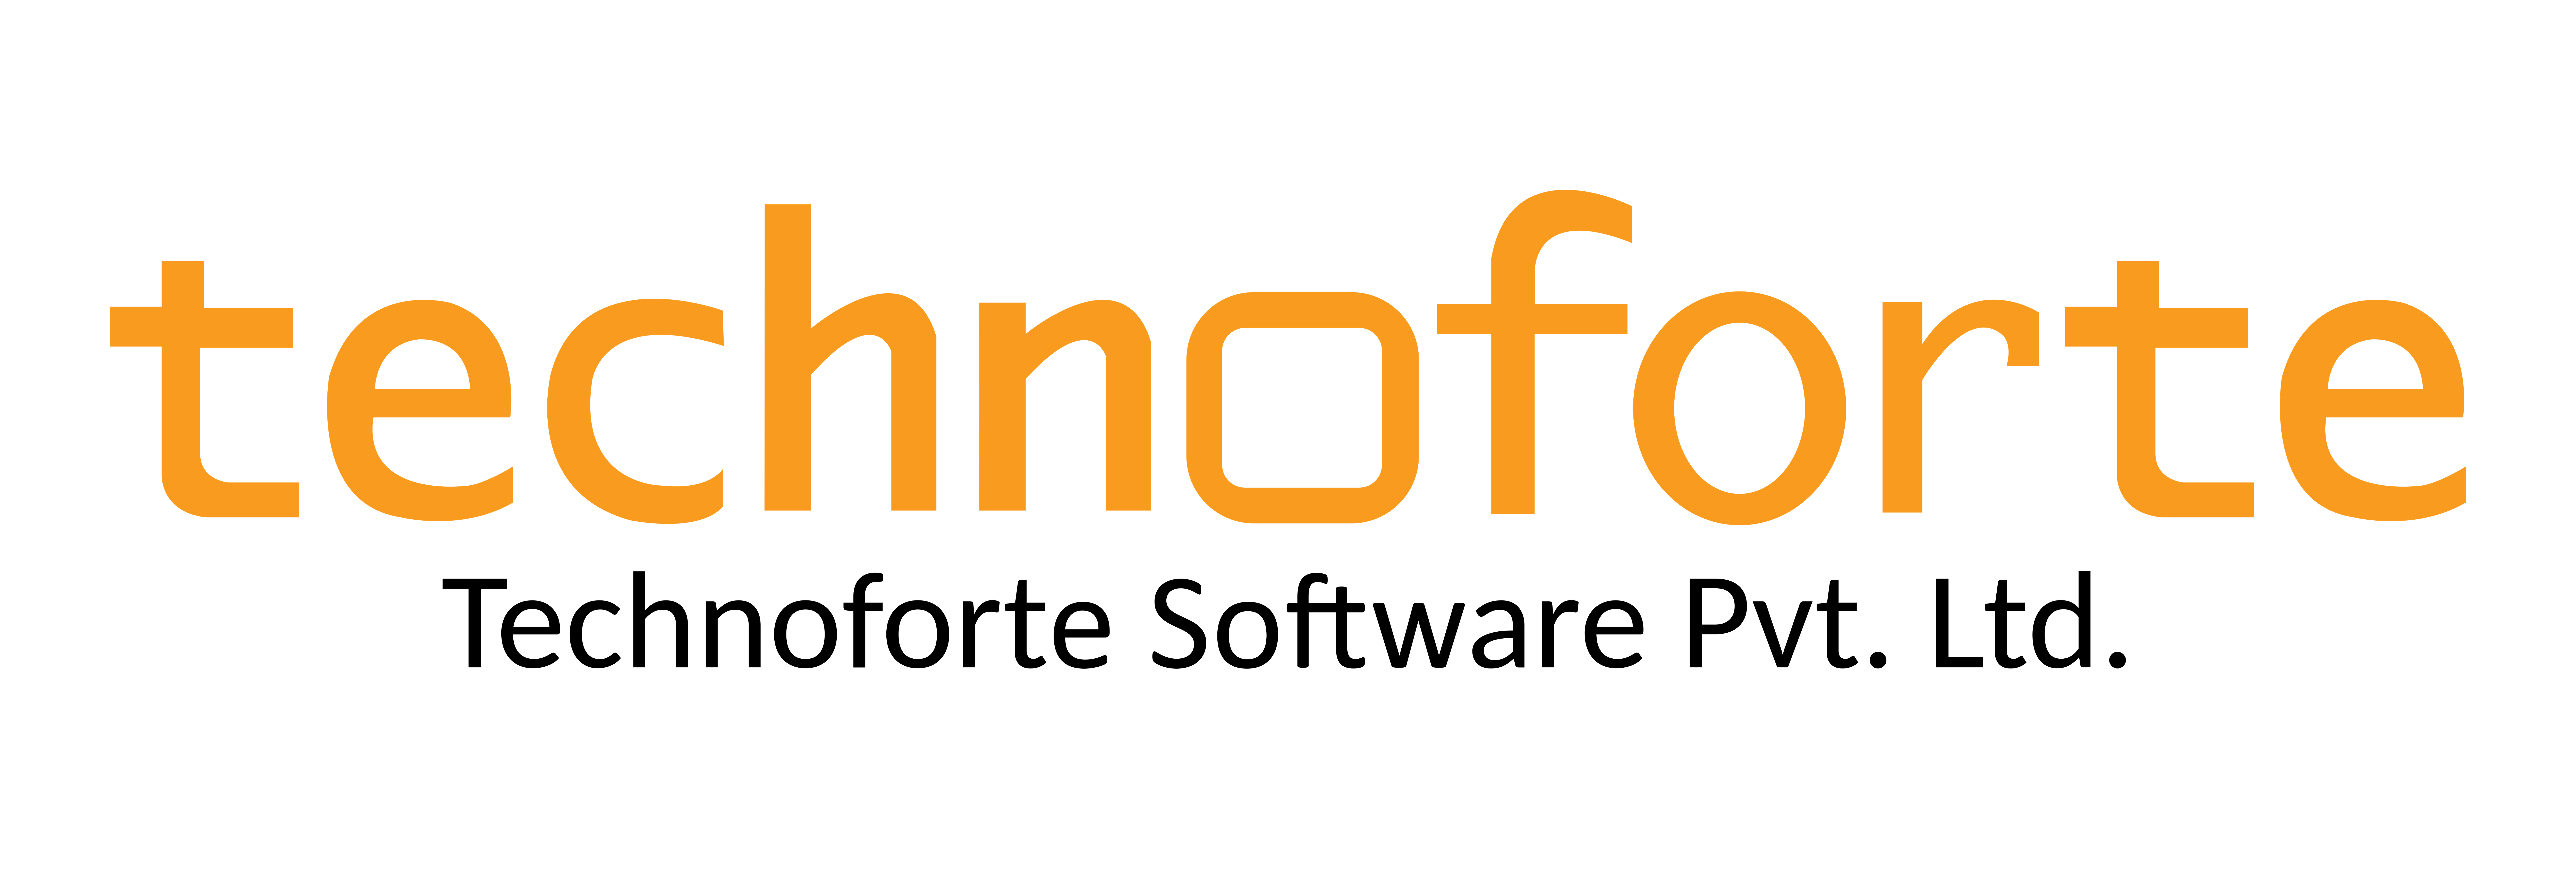 Technoforte Logo